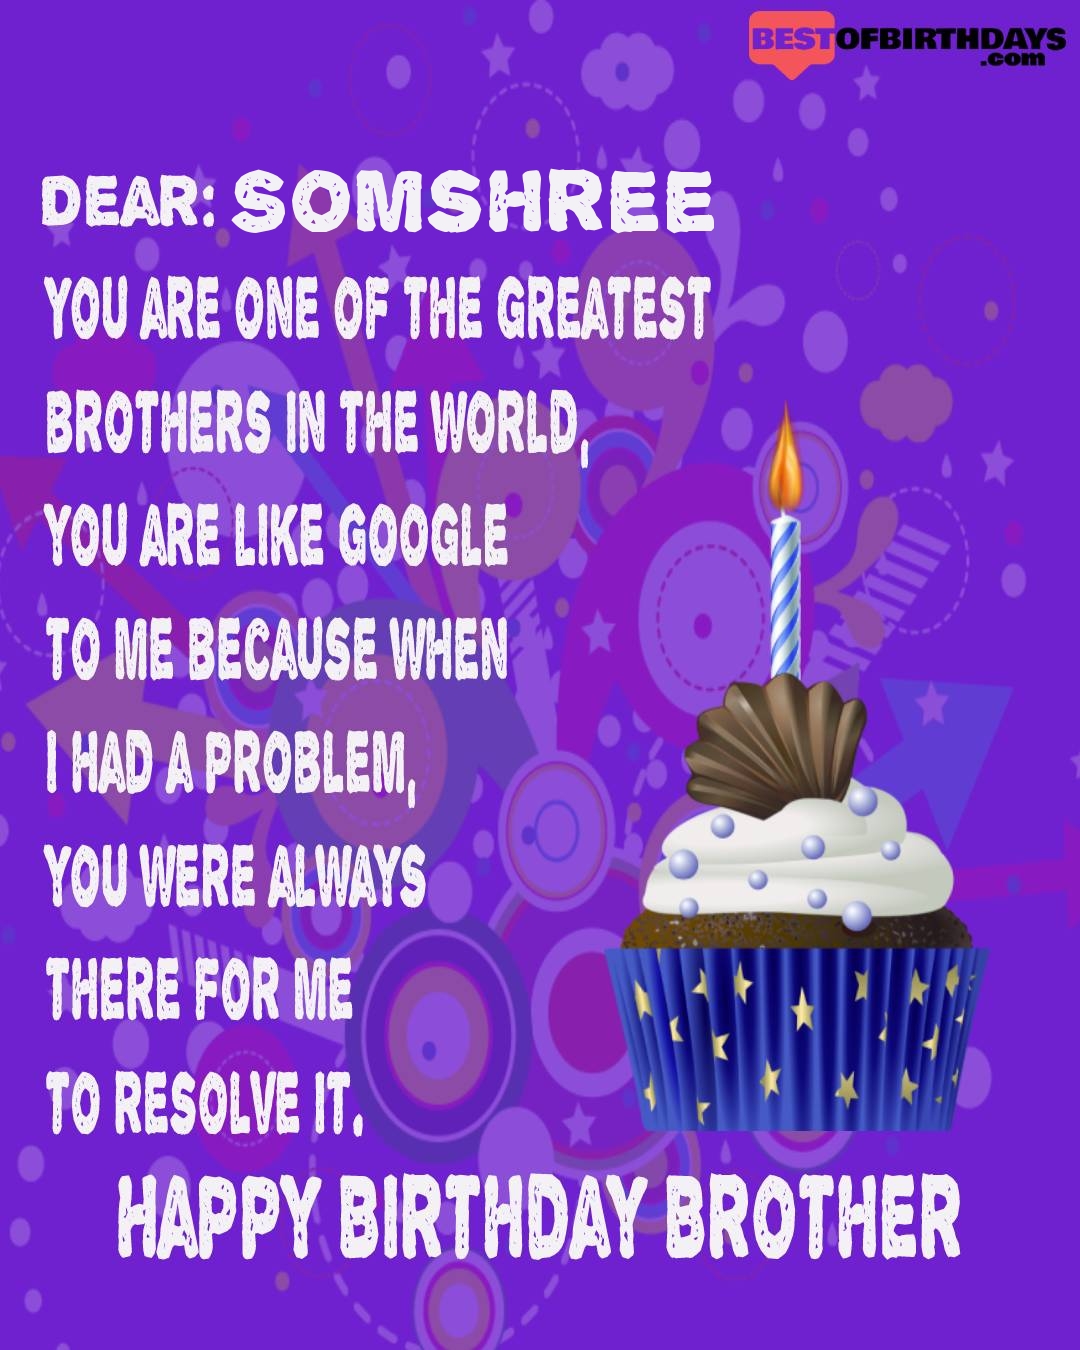 Happy birthday somshree bhai brother bro